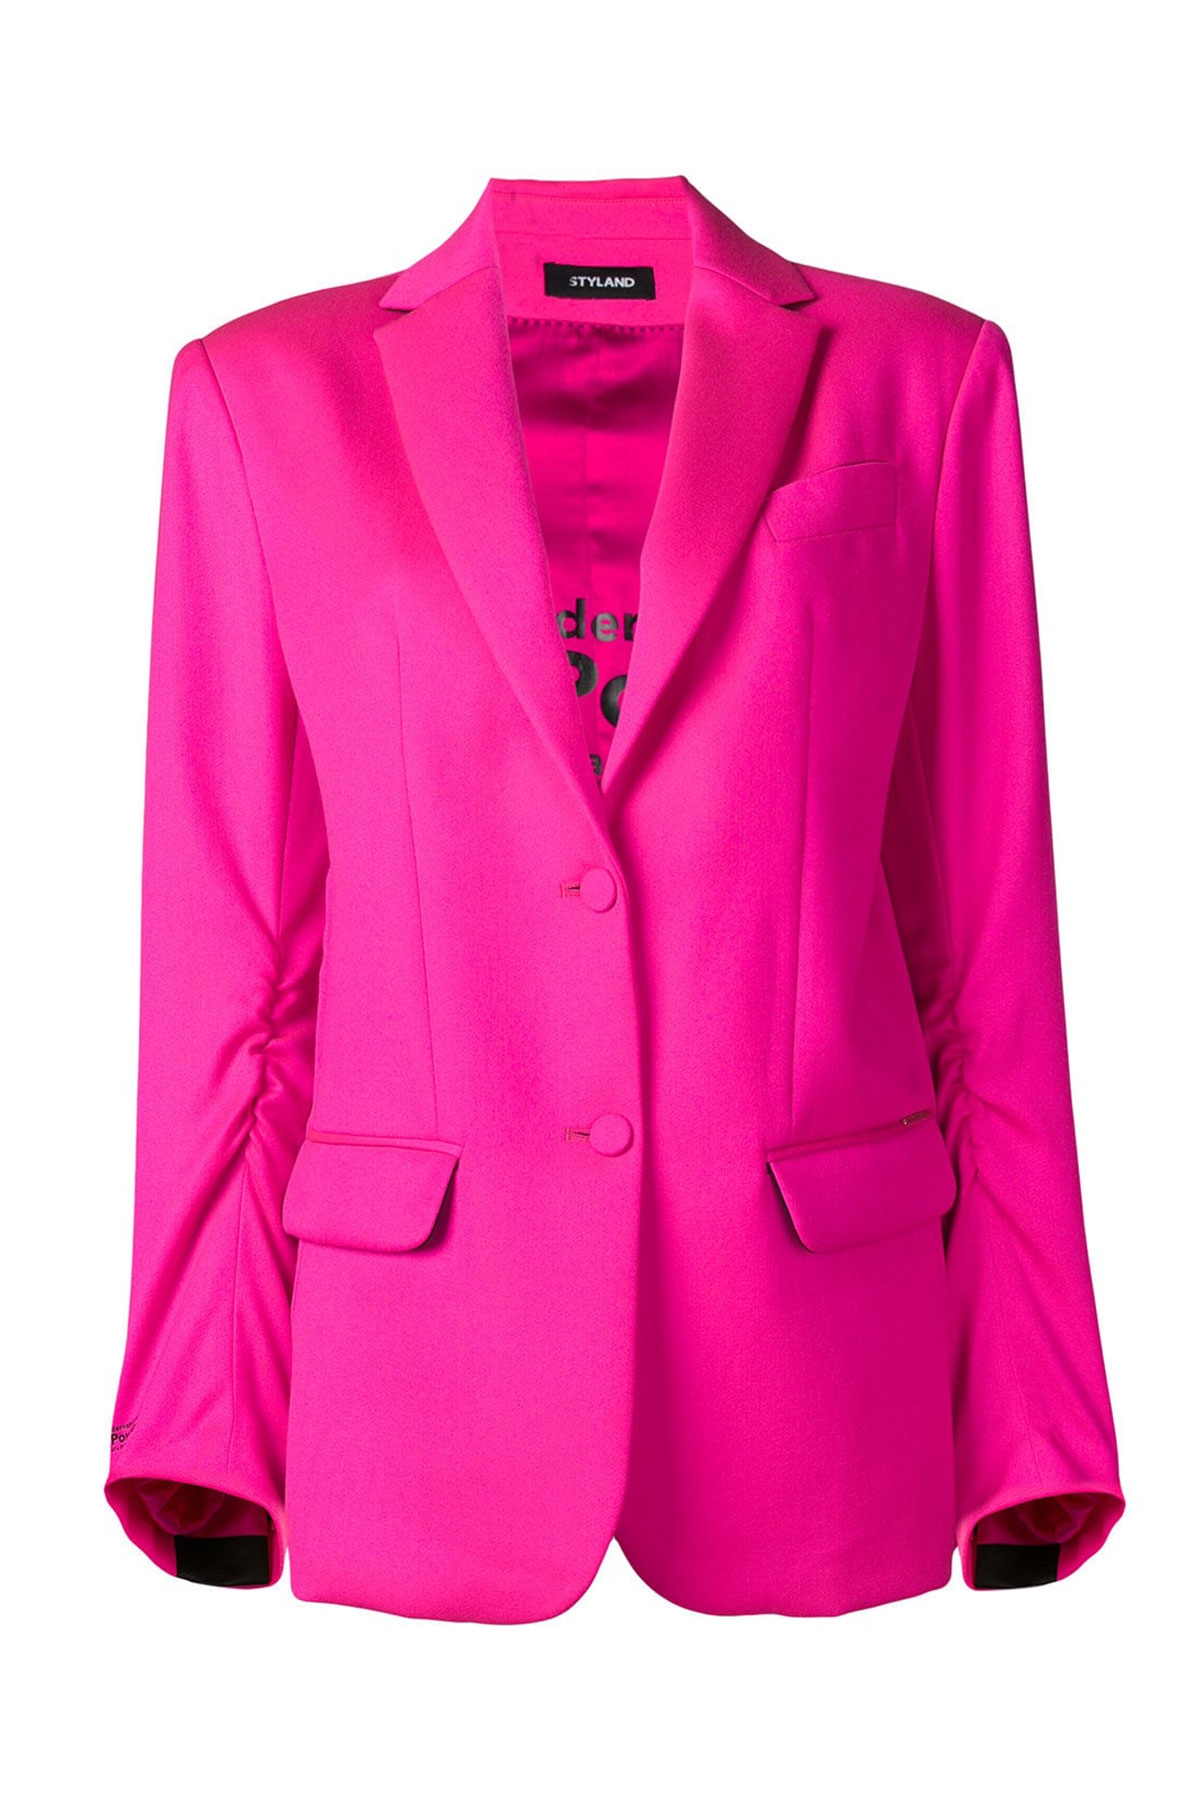 fluo-pink-oversized-blazer-styland